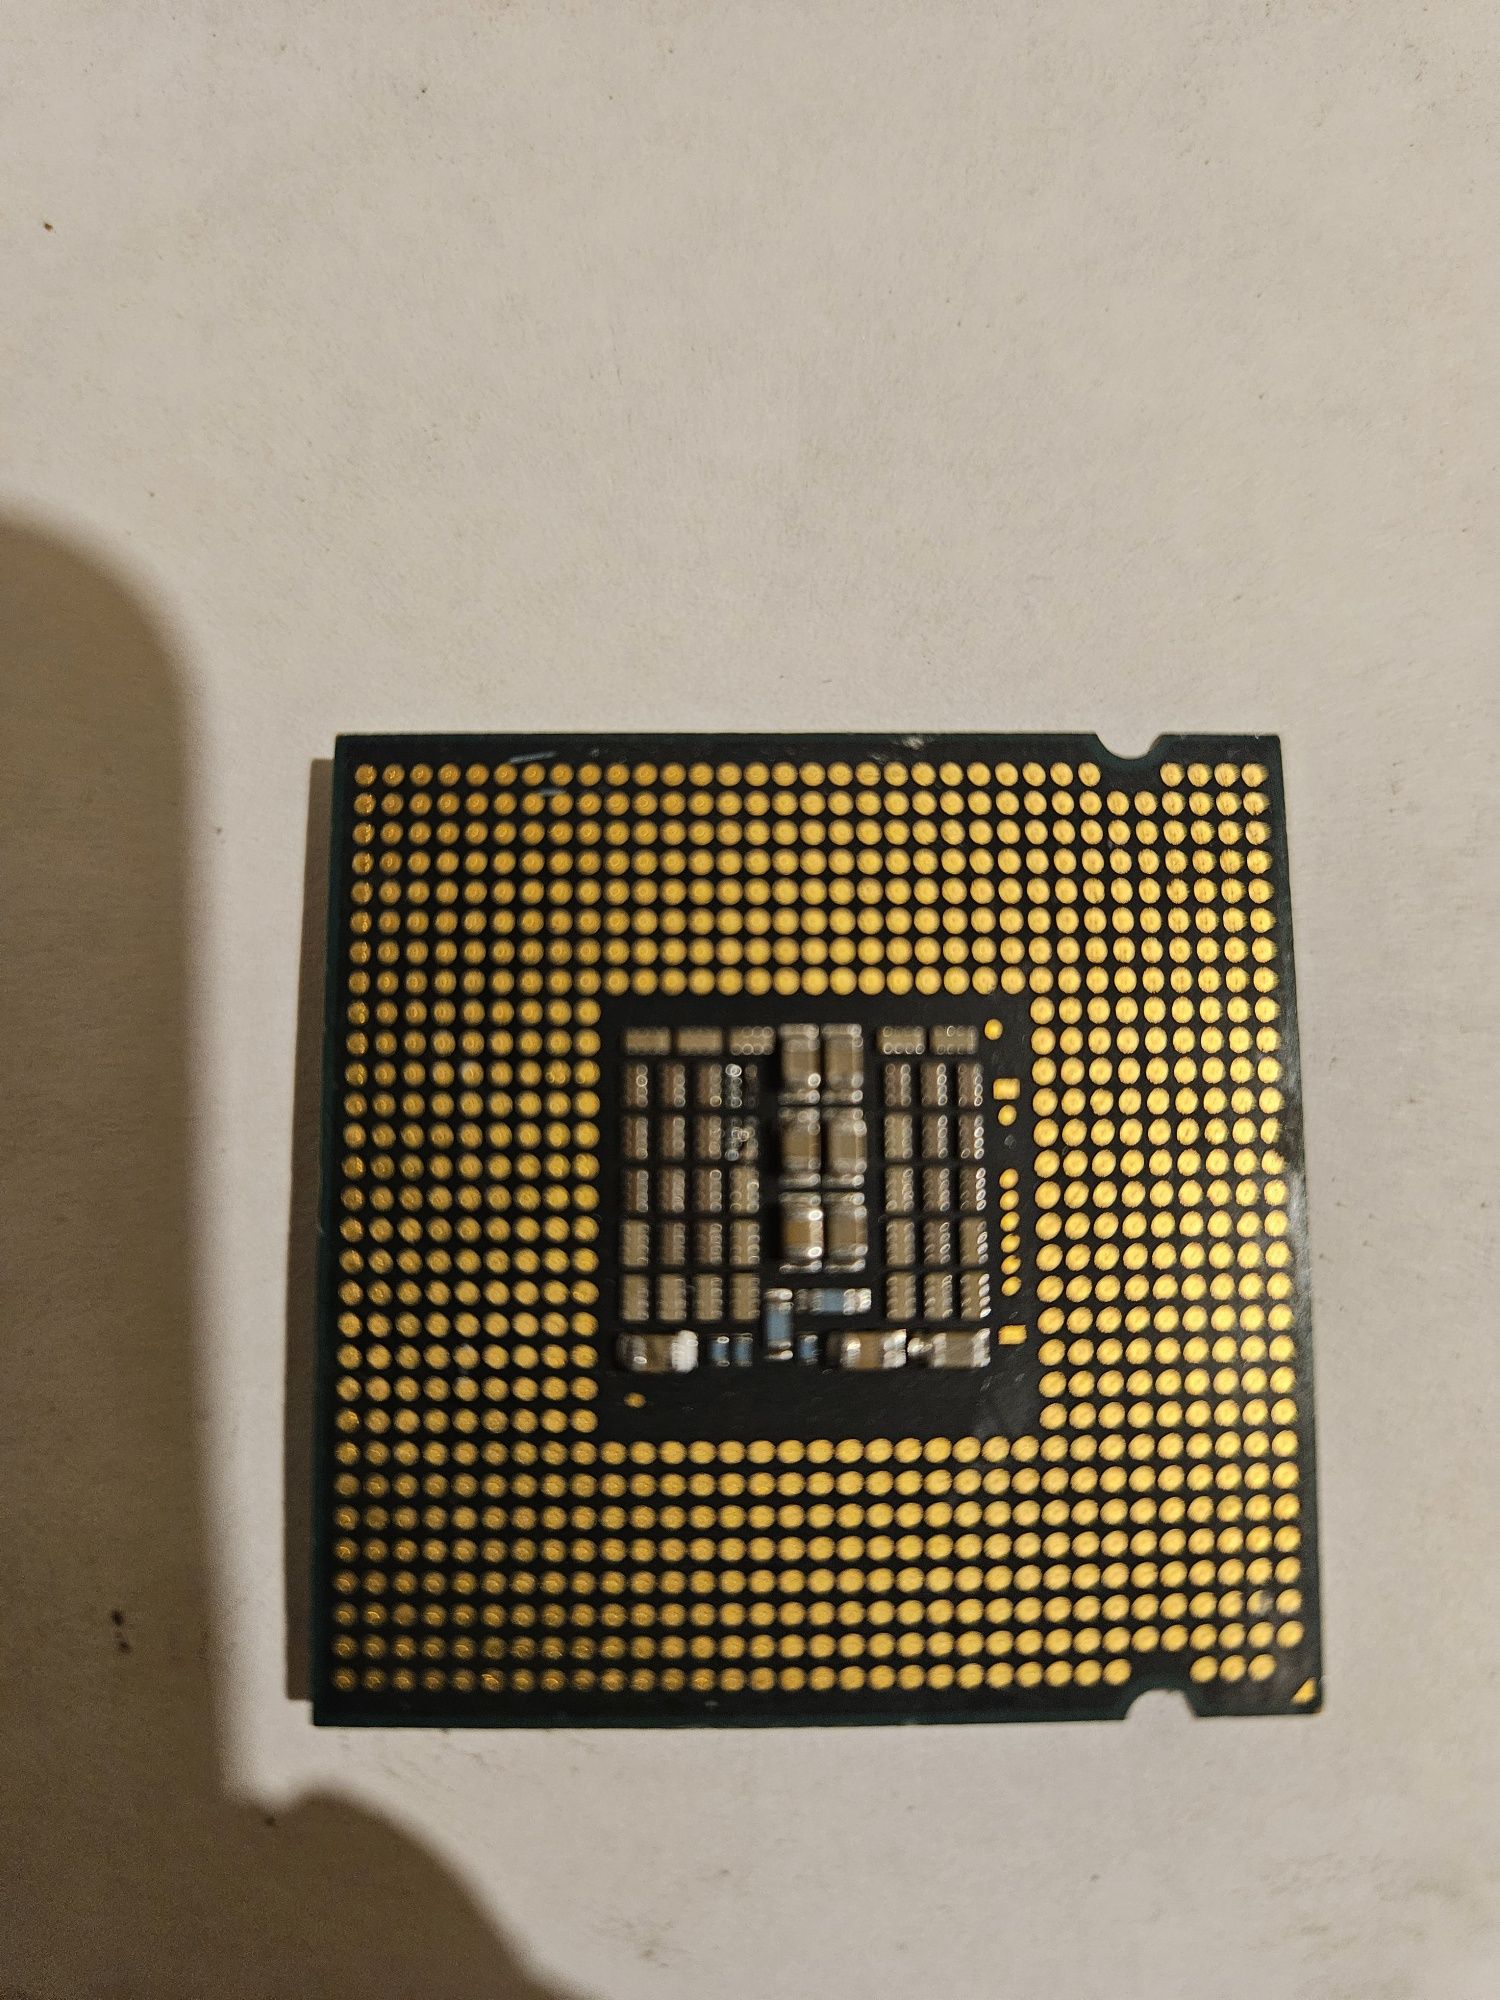 Vand procesor pc intel core 2 quad extreme QX9650 socket 775